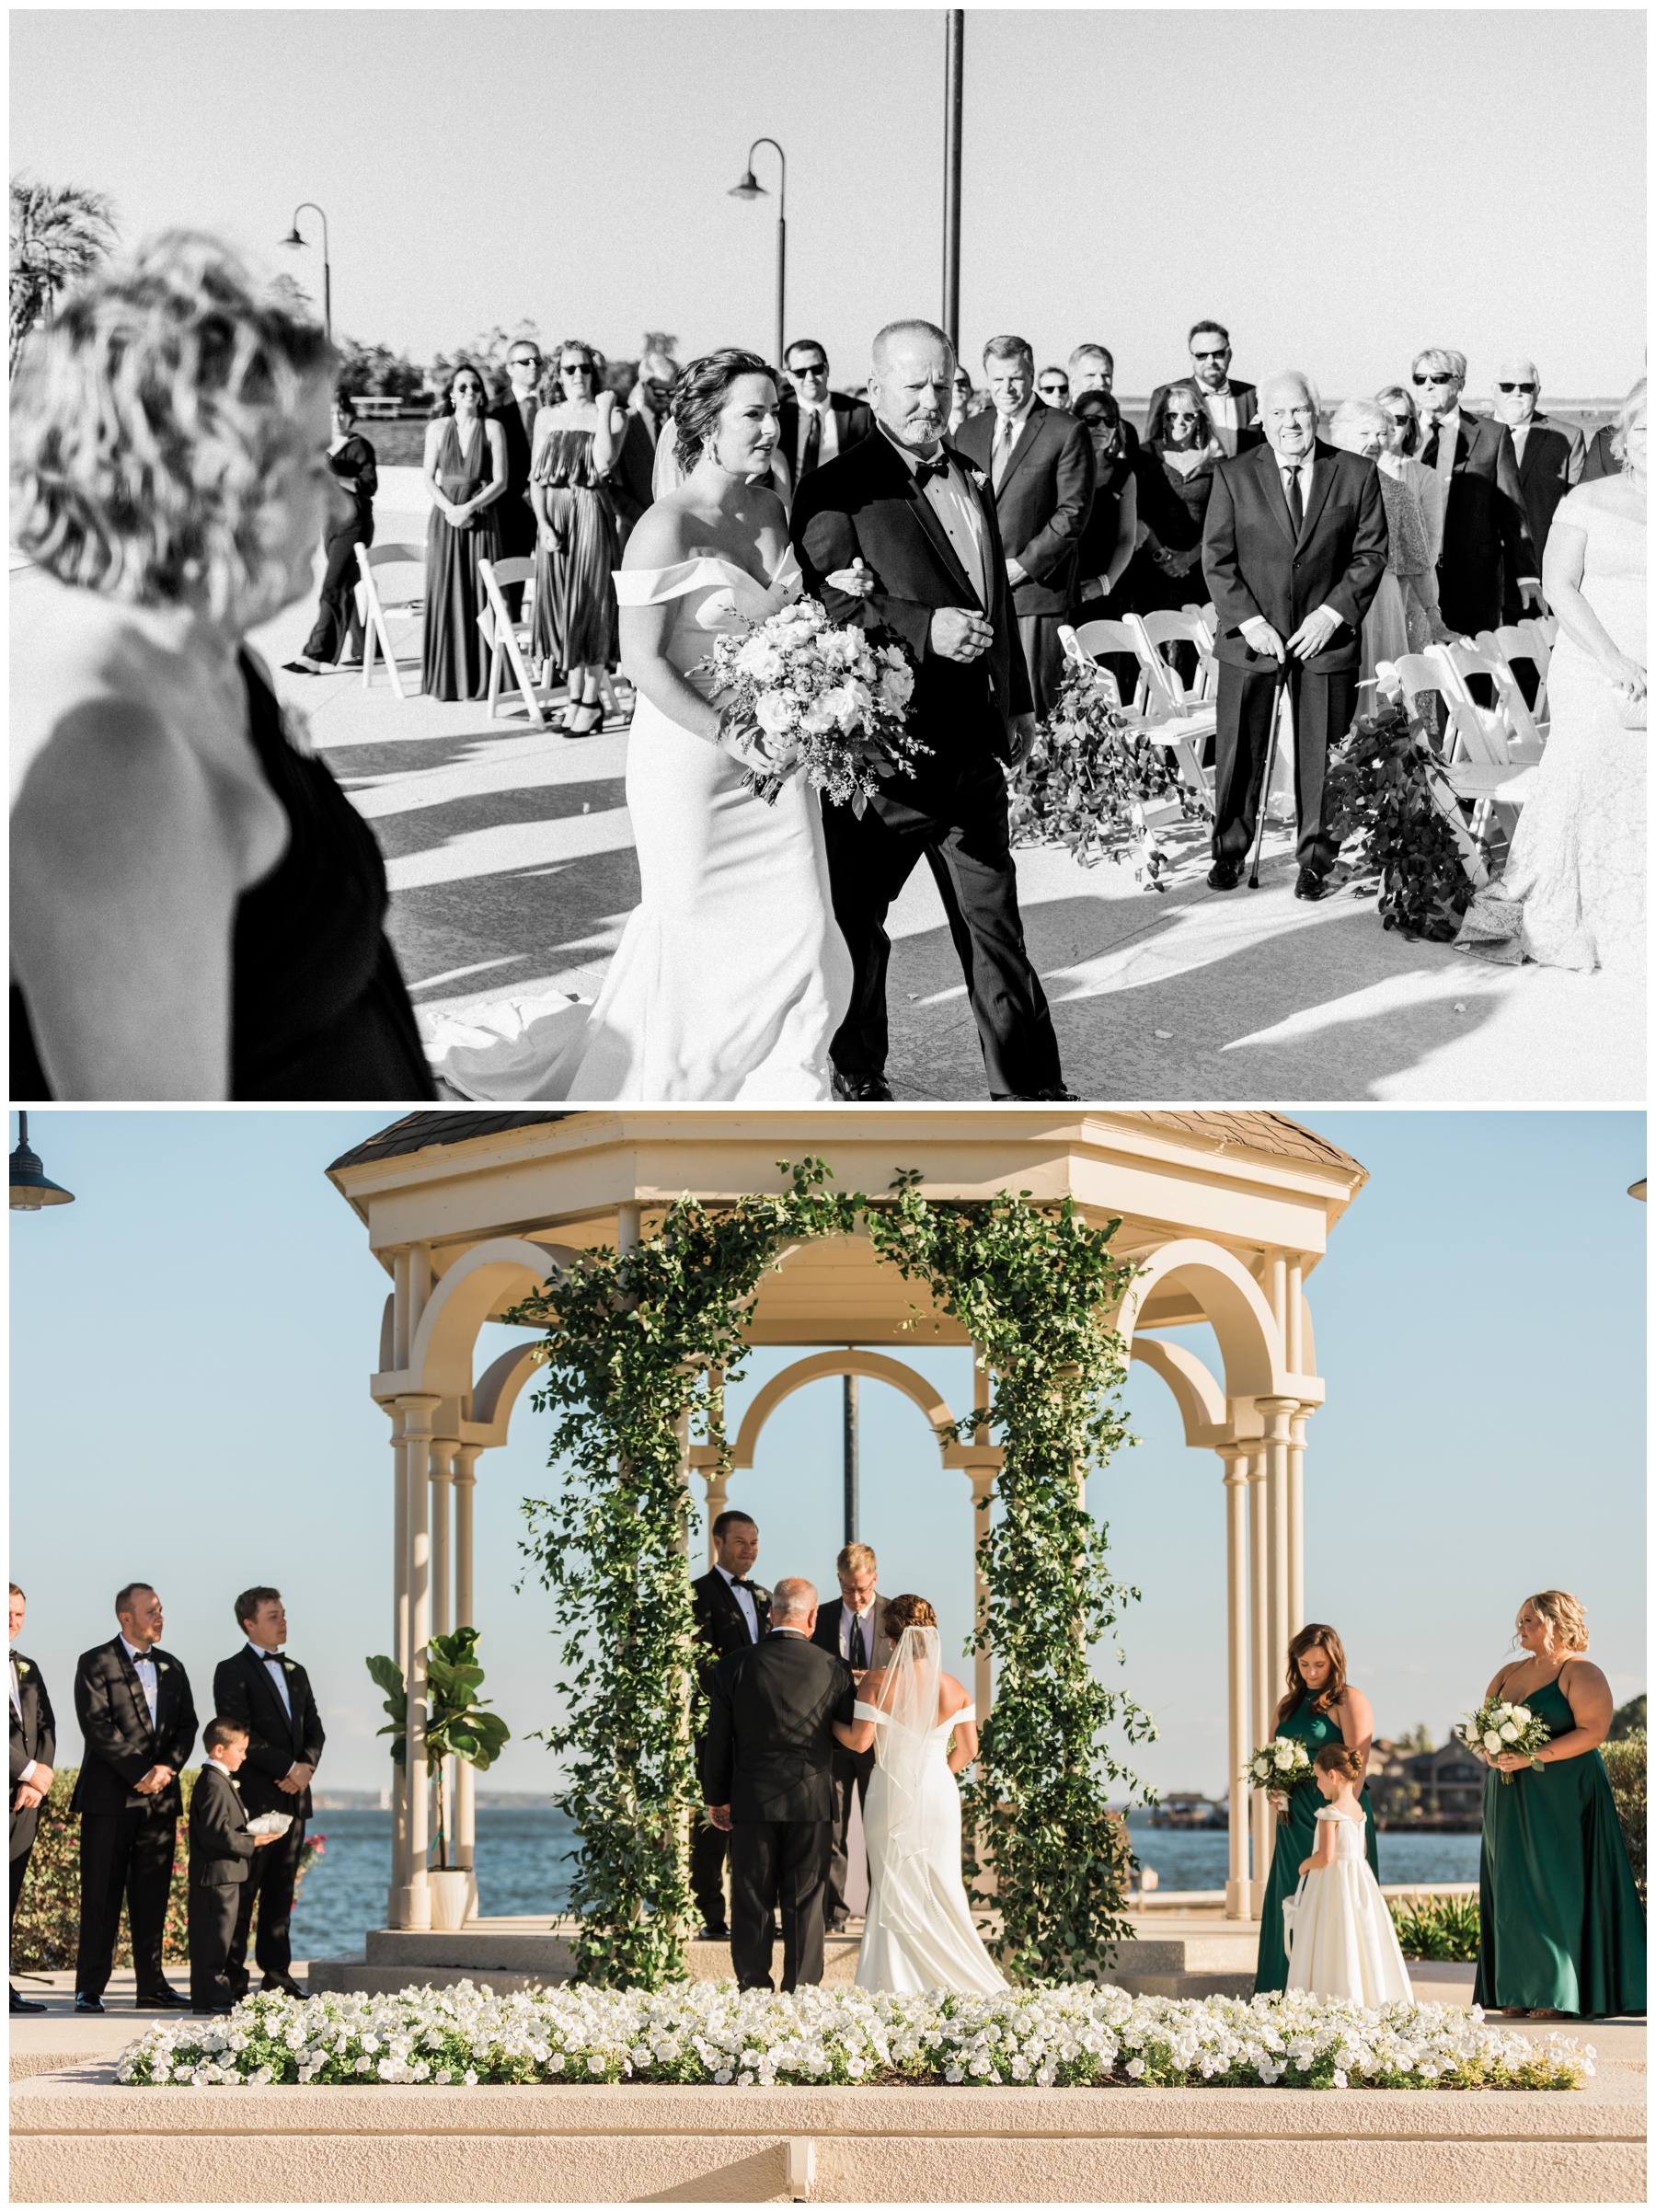 Wedding ceremony in the gazebo at Bentwater Yacht Club